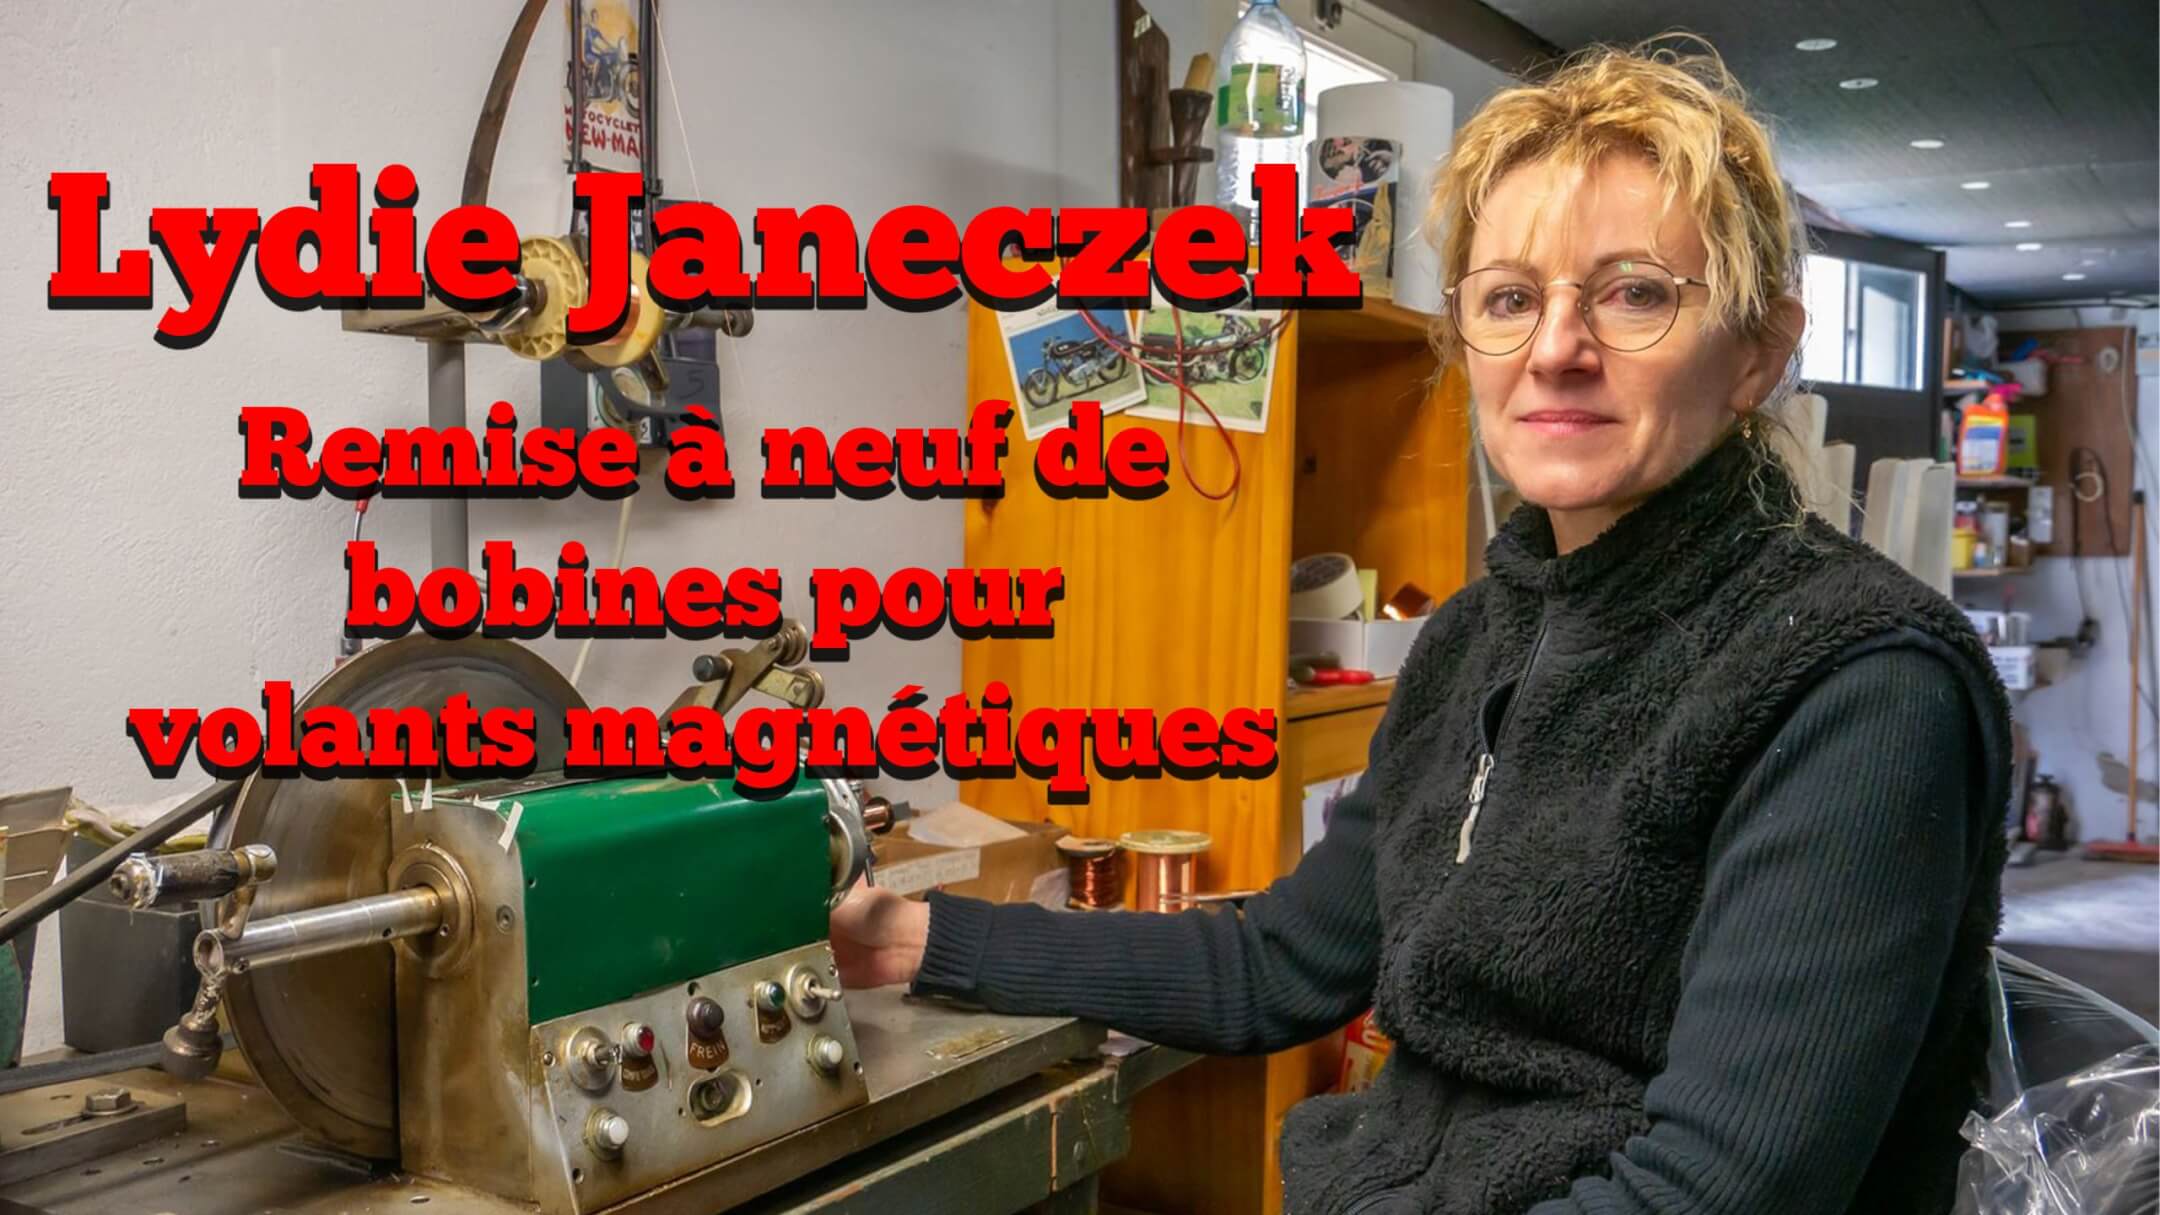 LYDIE JANECZEK, INTERVIEW VIdeo